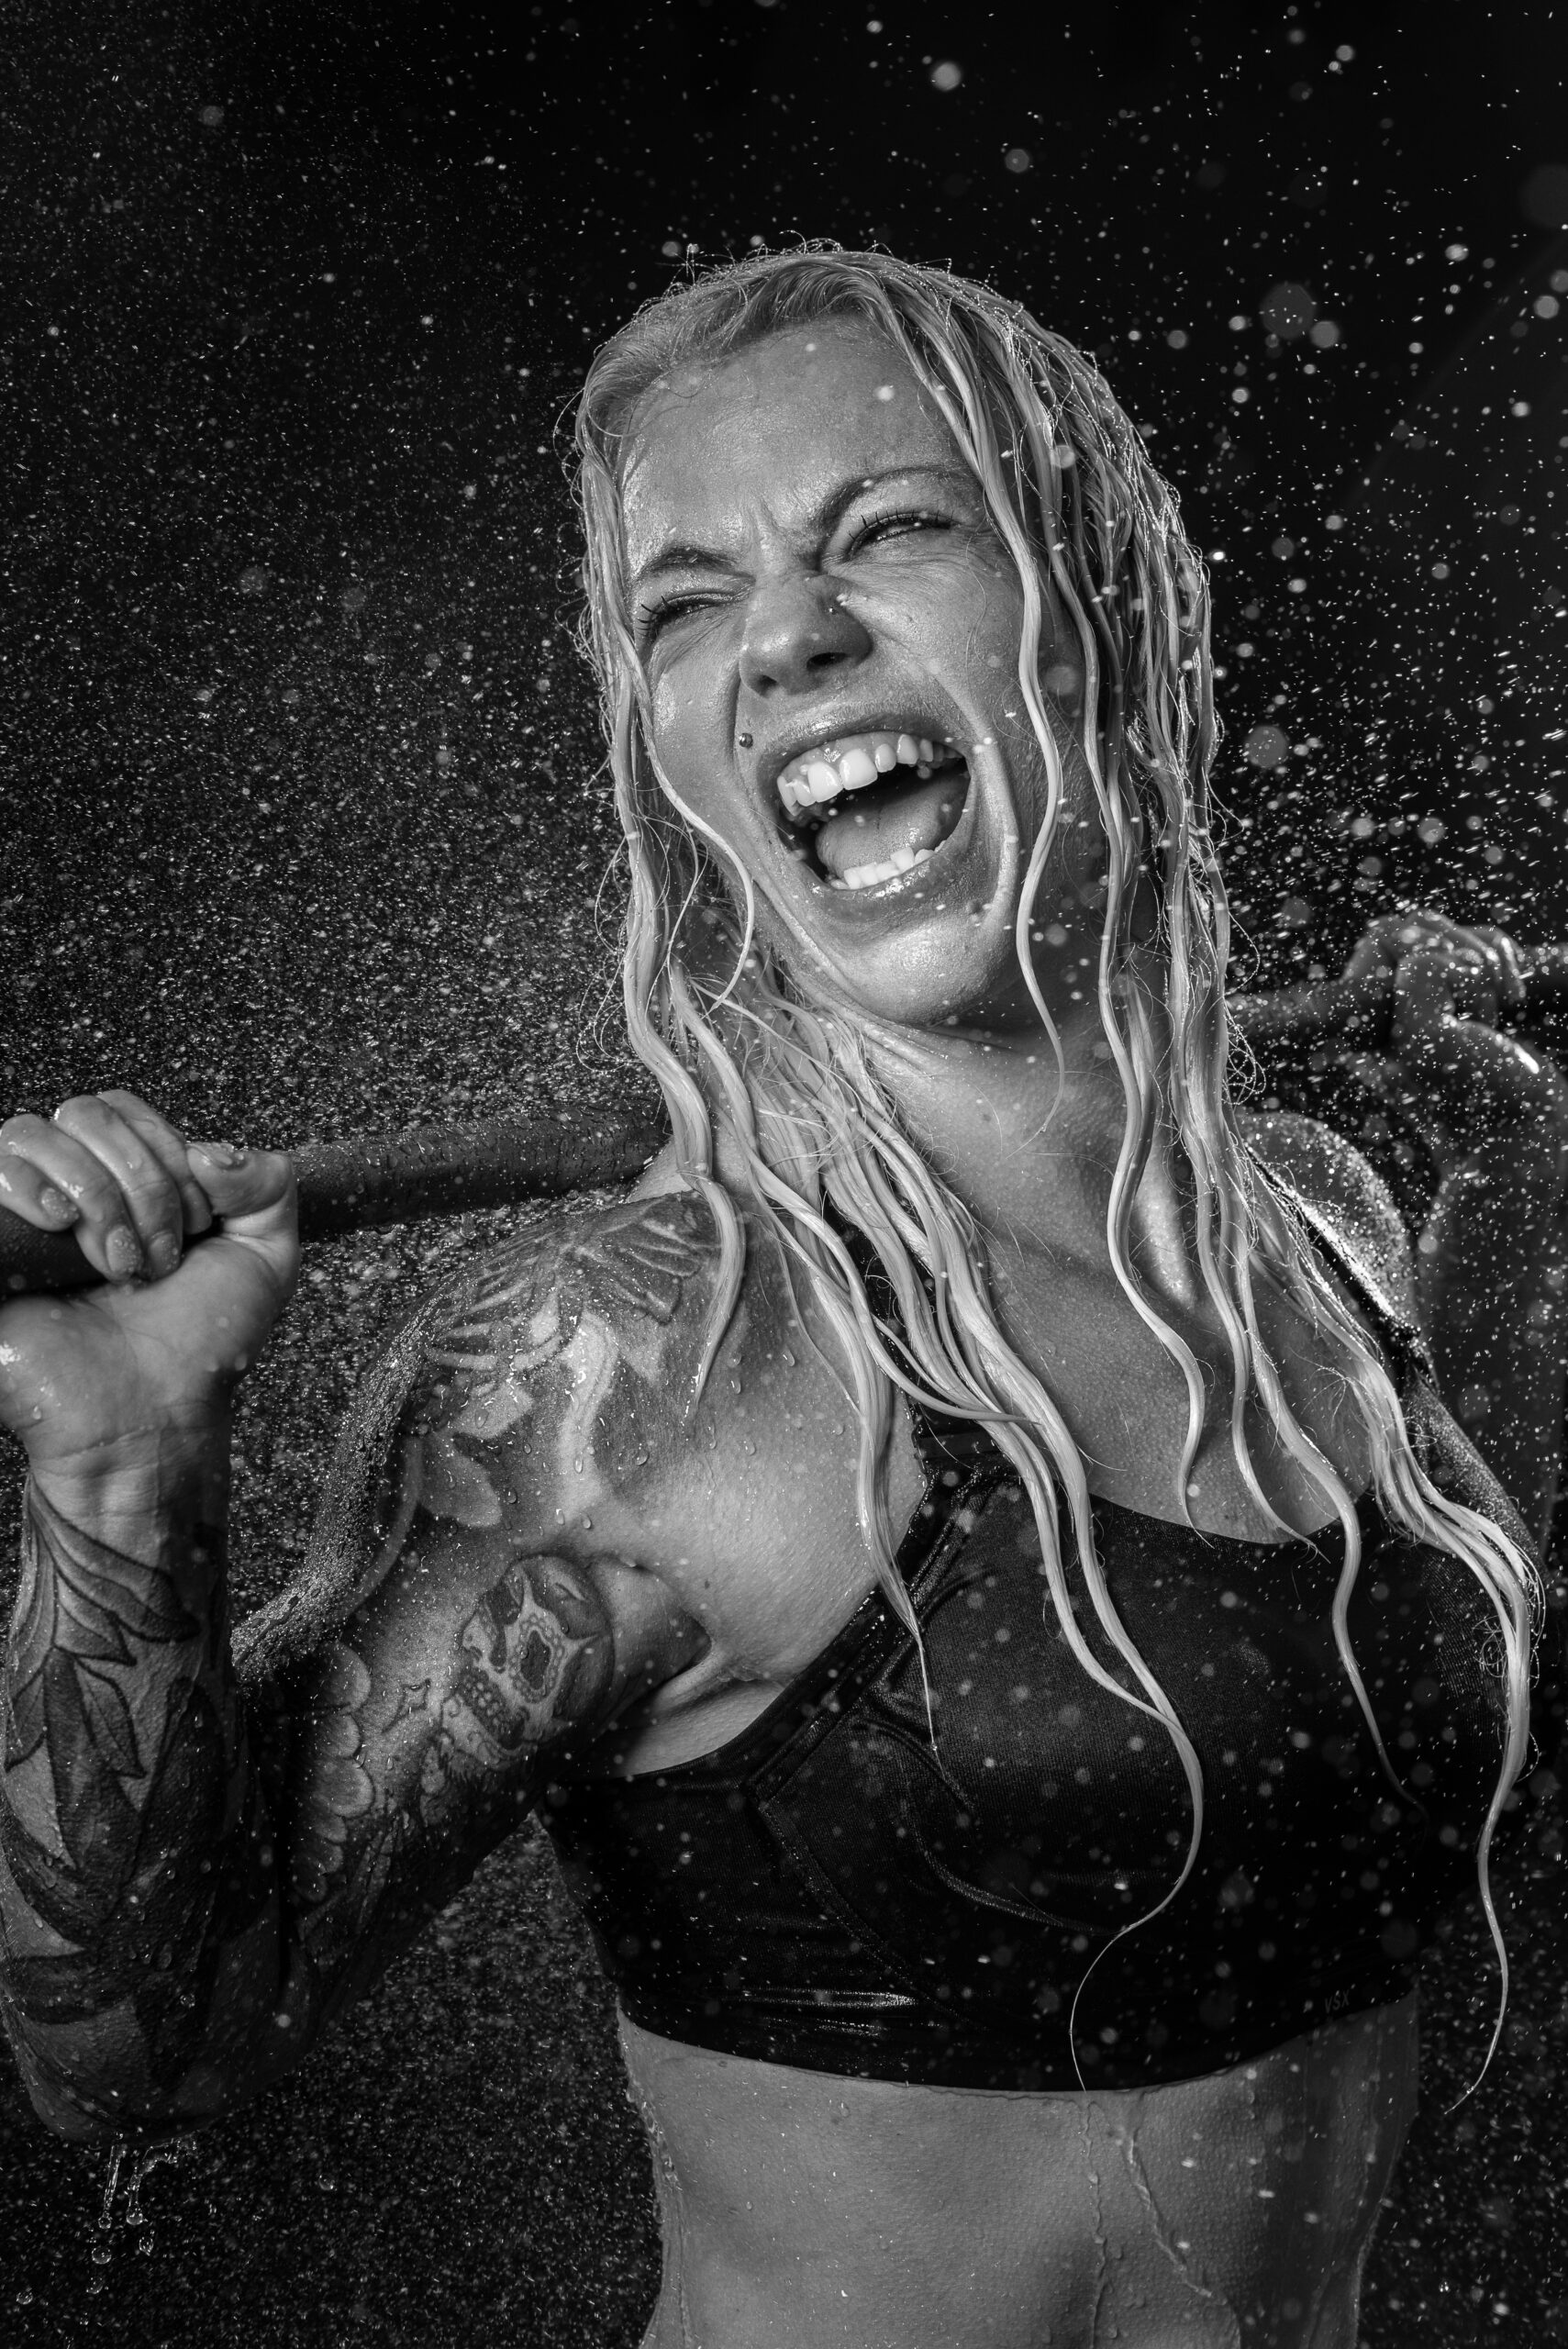 powerful female body builder with water spray